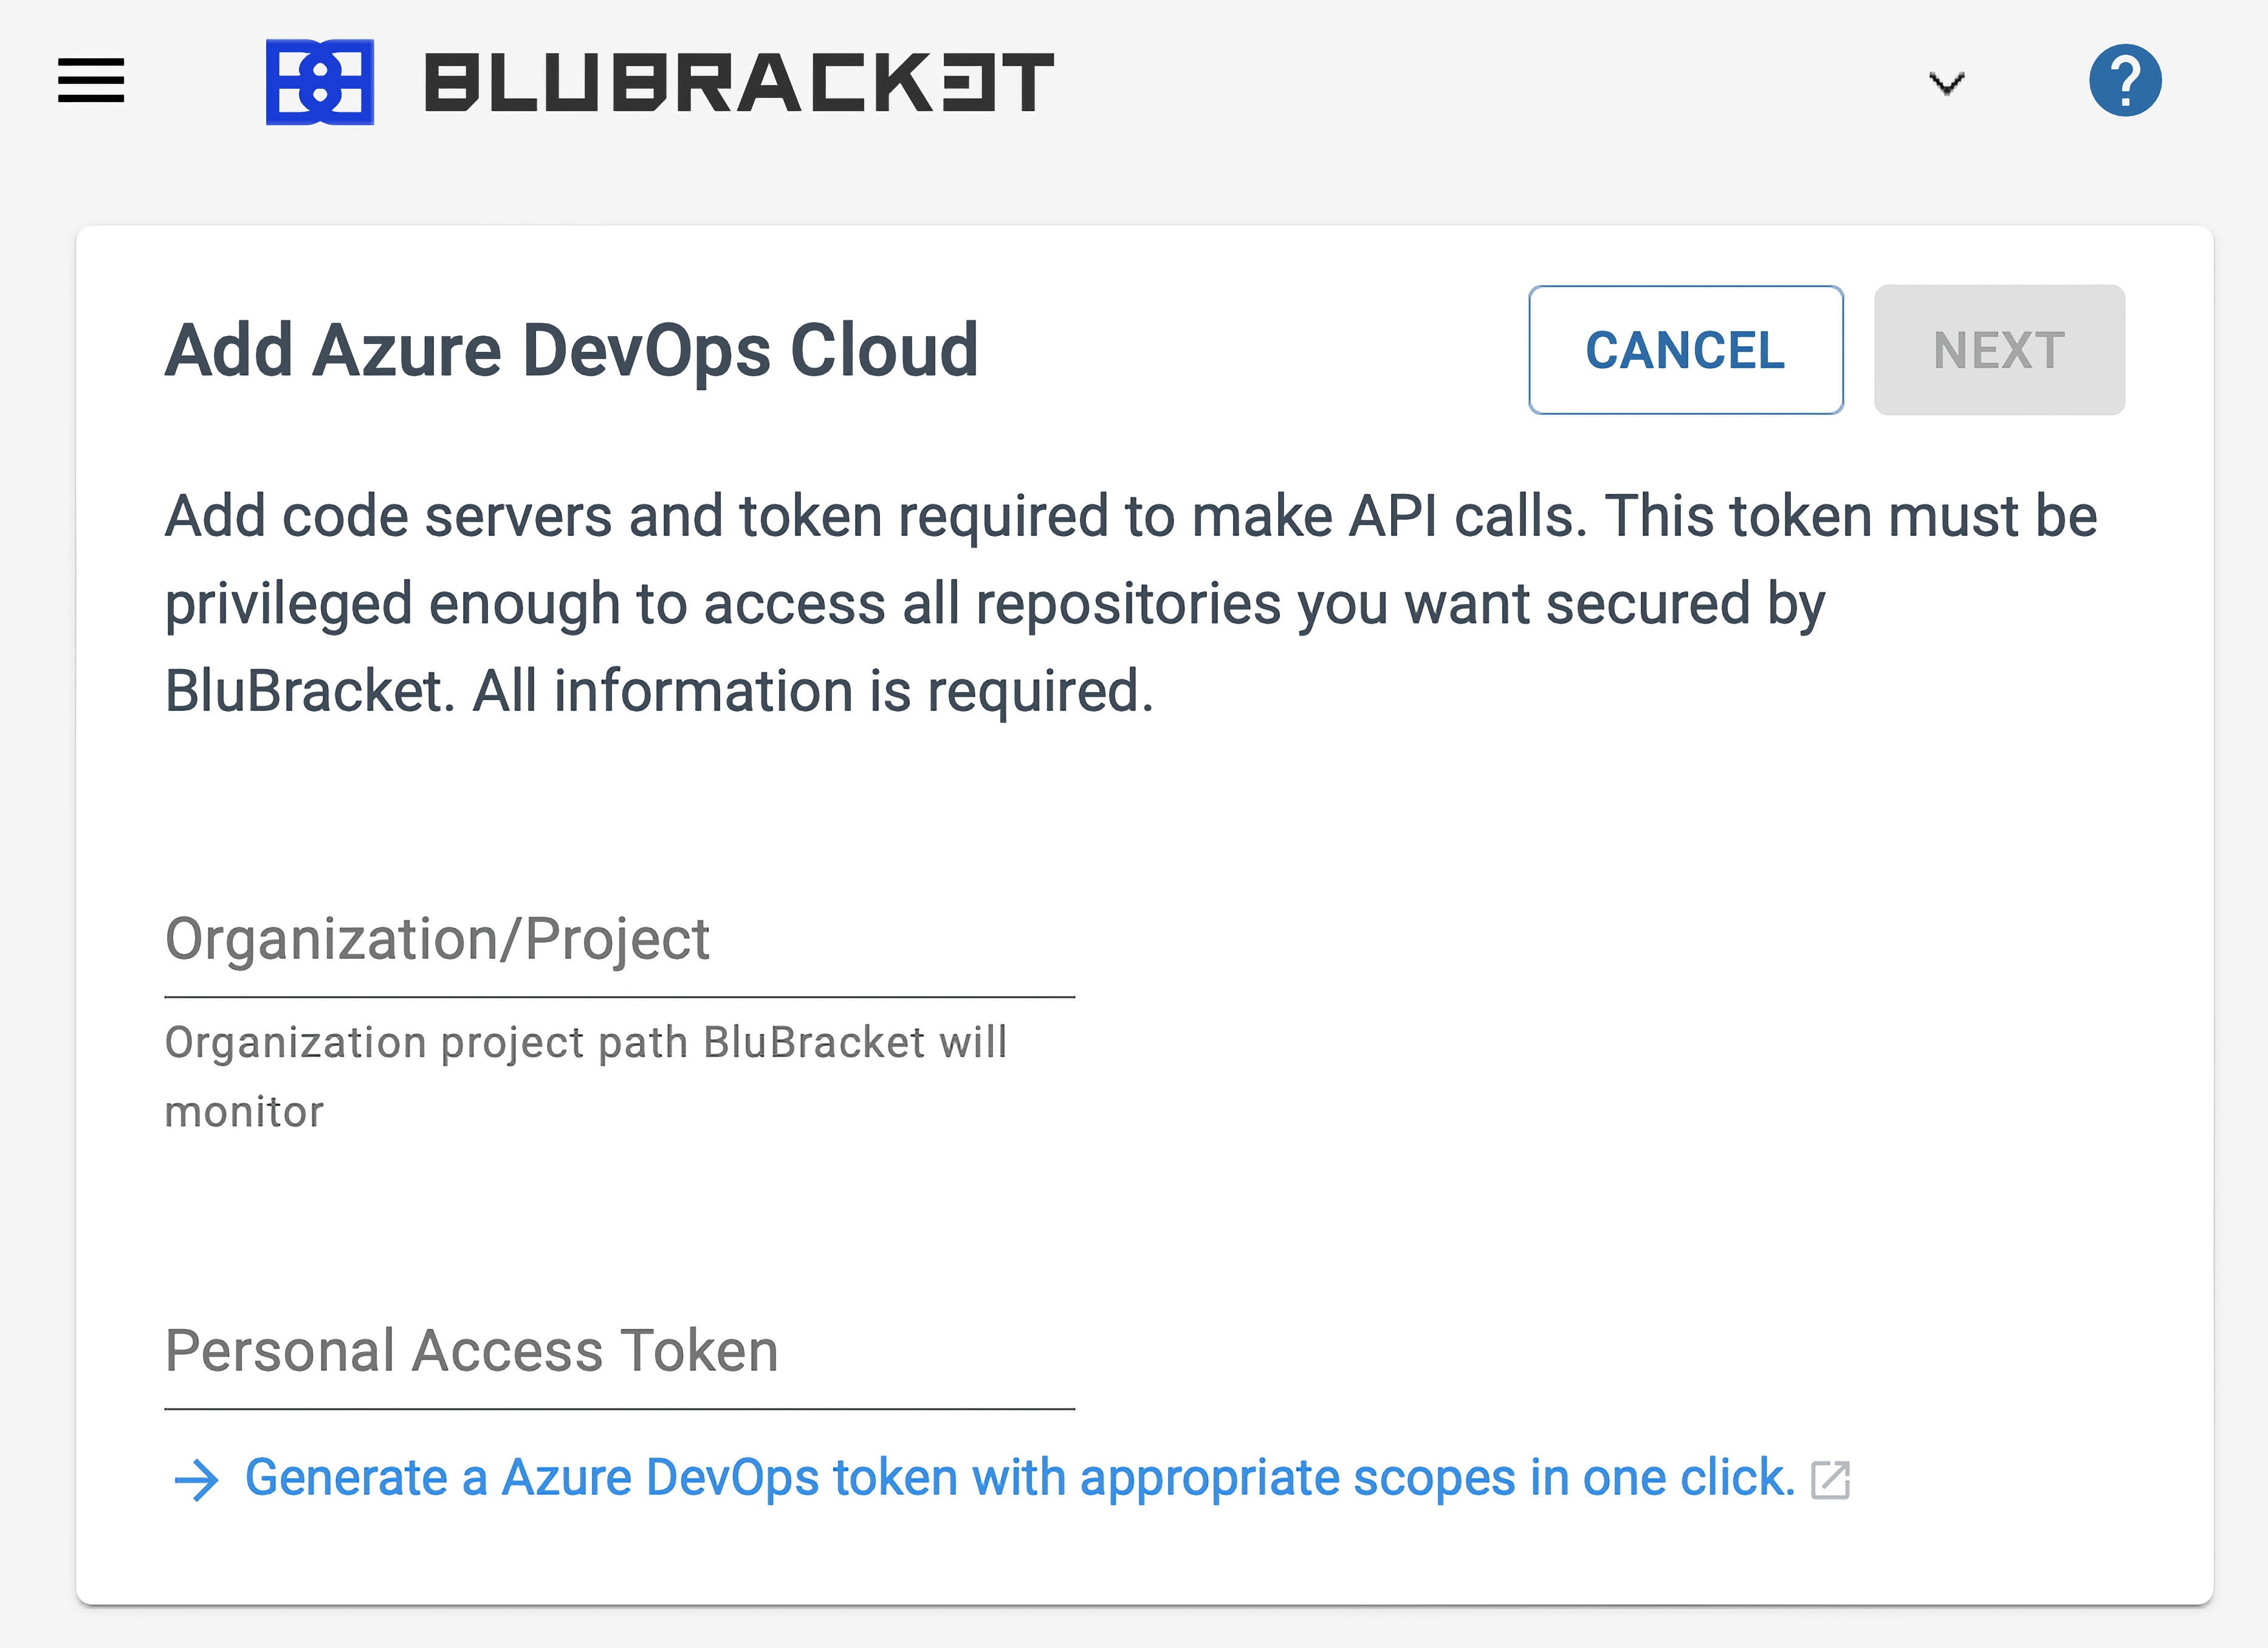 Add Azure DevOps code server